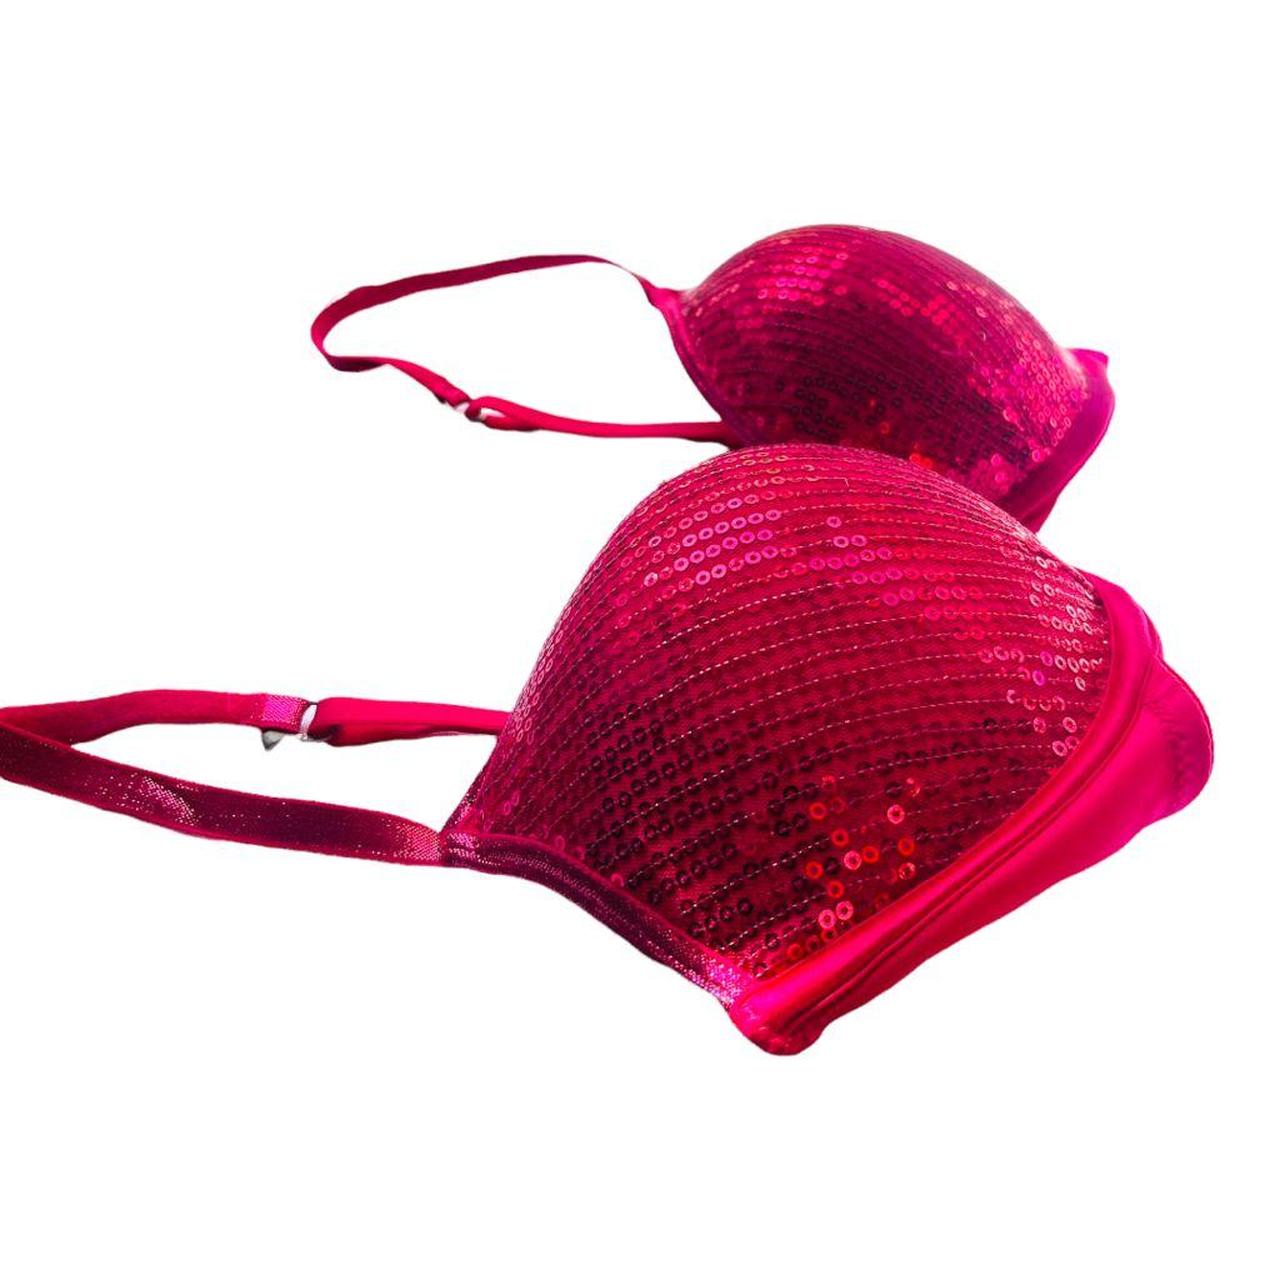 Victoria's Secret, Intimates & Sleepwear, Nwot Victoria Secret Red And  Pink Lace Pushup Bra Set Size 32c